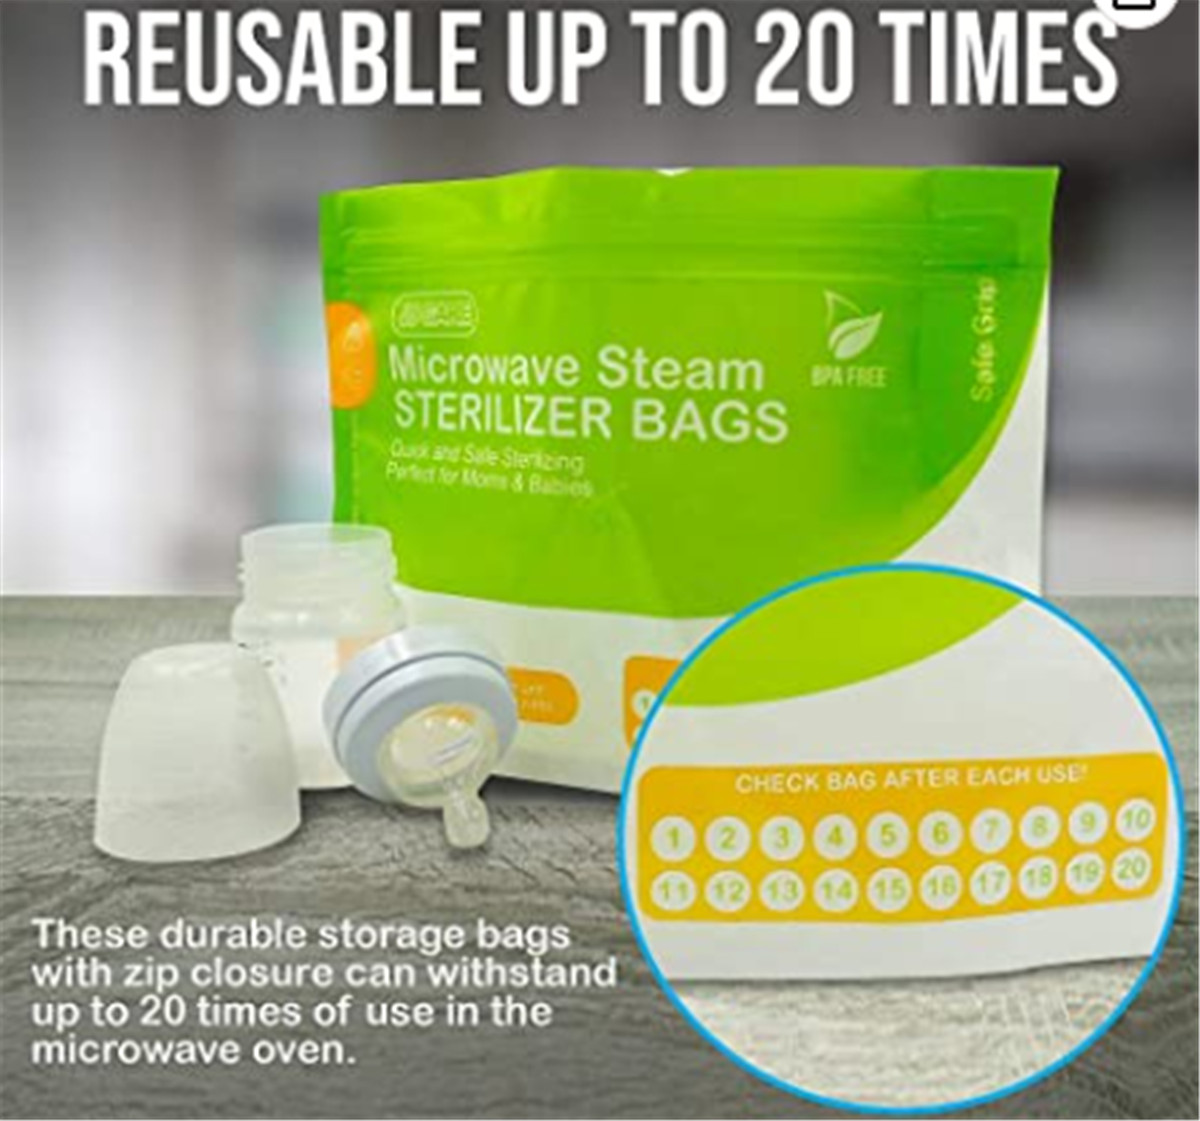 Microwave Bottle Sterilizer Bags Sterilizer Bags for Baby Bottles - 400 ການນໍາໃຊ້ - ຖົງໄອນ້ໍາໄມໂຄເວຟທີ່ໃຊ້ຄືນໃຫມ່ສໍາລັບຂວດເດັກນ້ອຍ - ຖົງຂ້າເຊື້ອແບັກທີເລຍ - ຖົງຂ້າເຊື້ອໄມໂຄເວຟ (3)